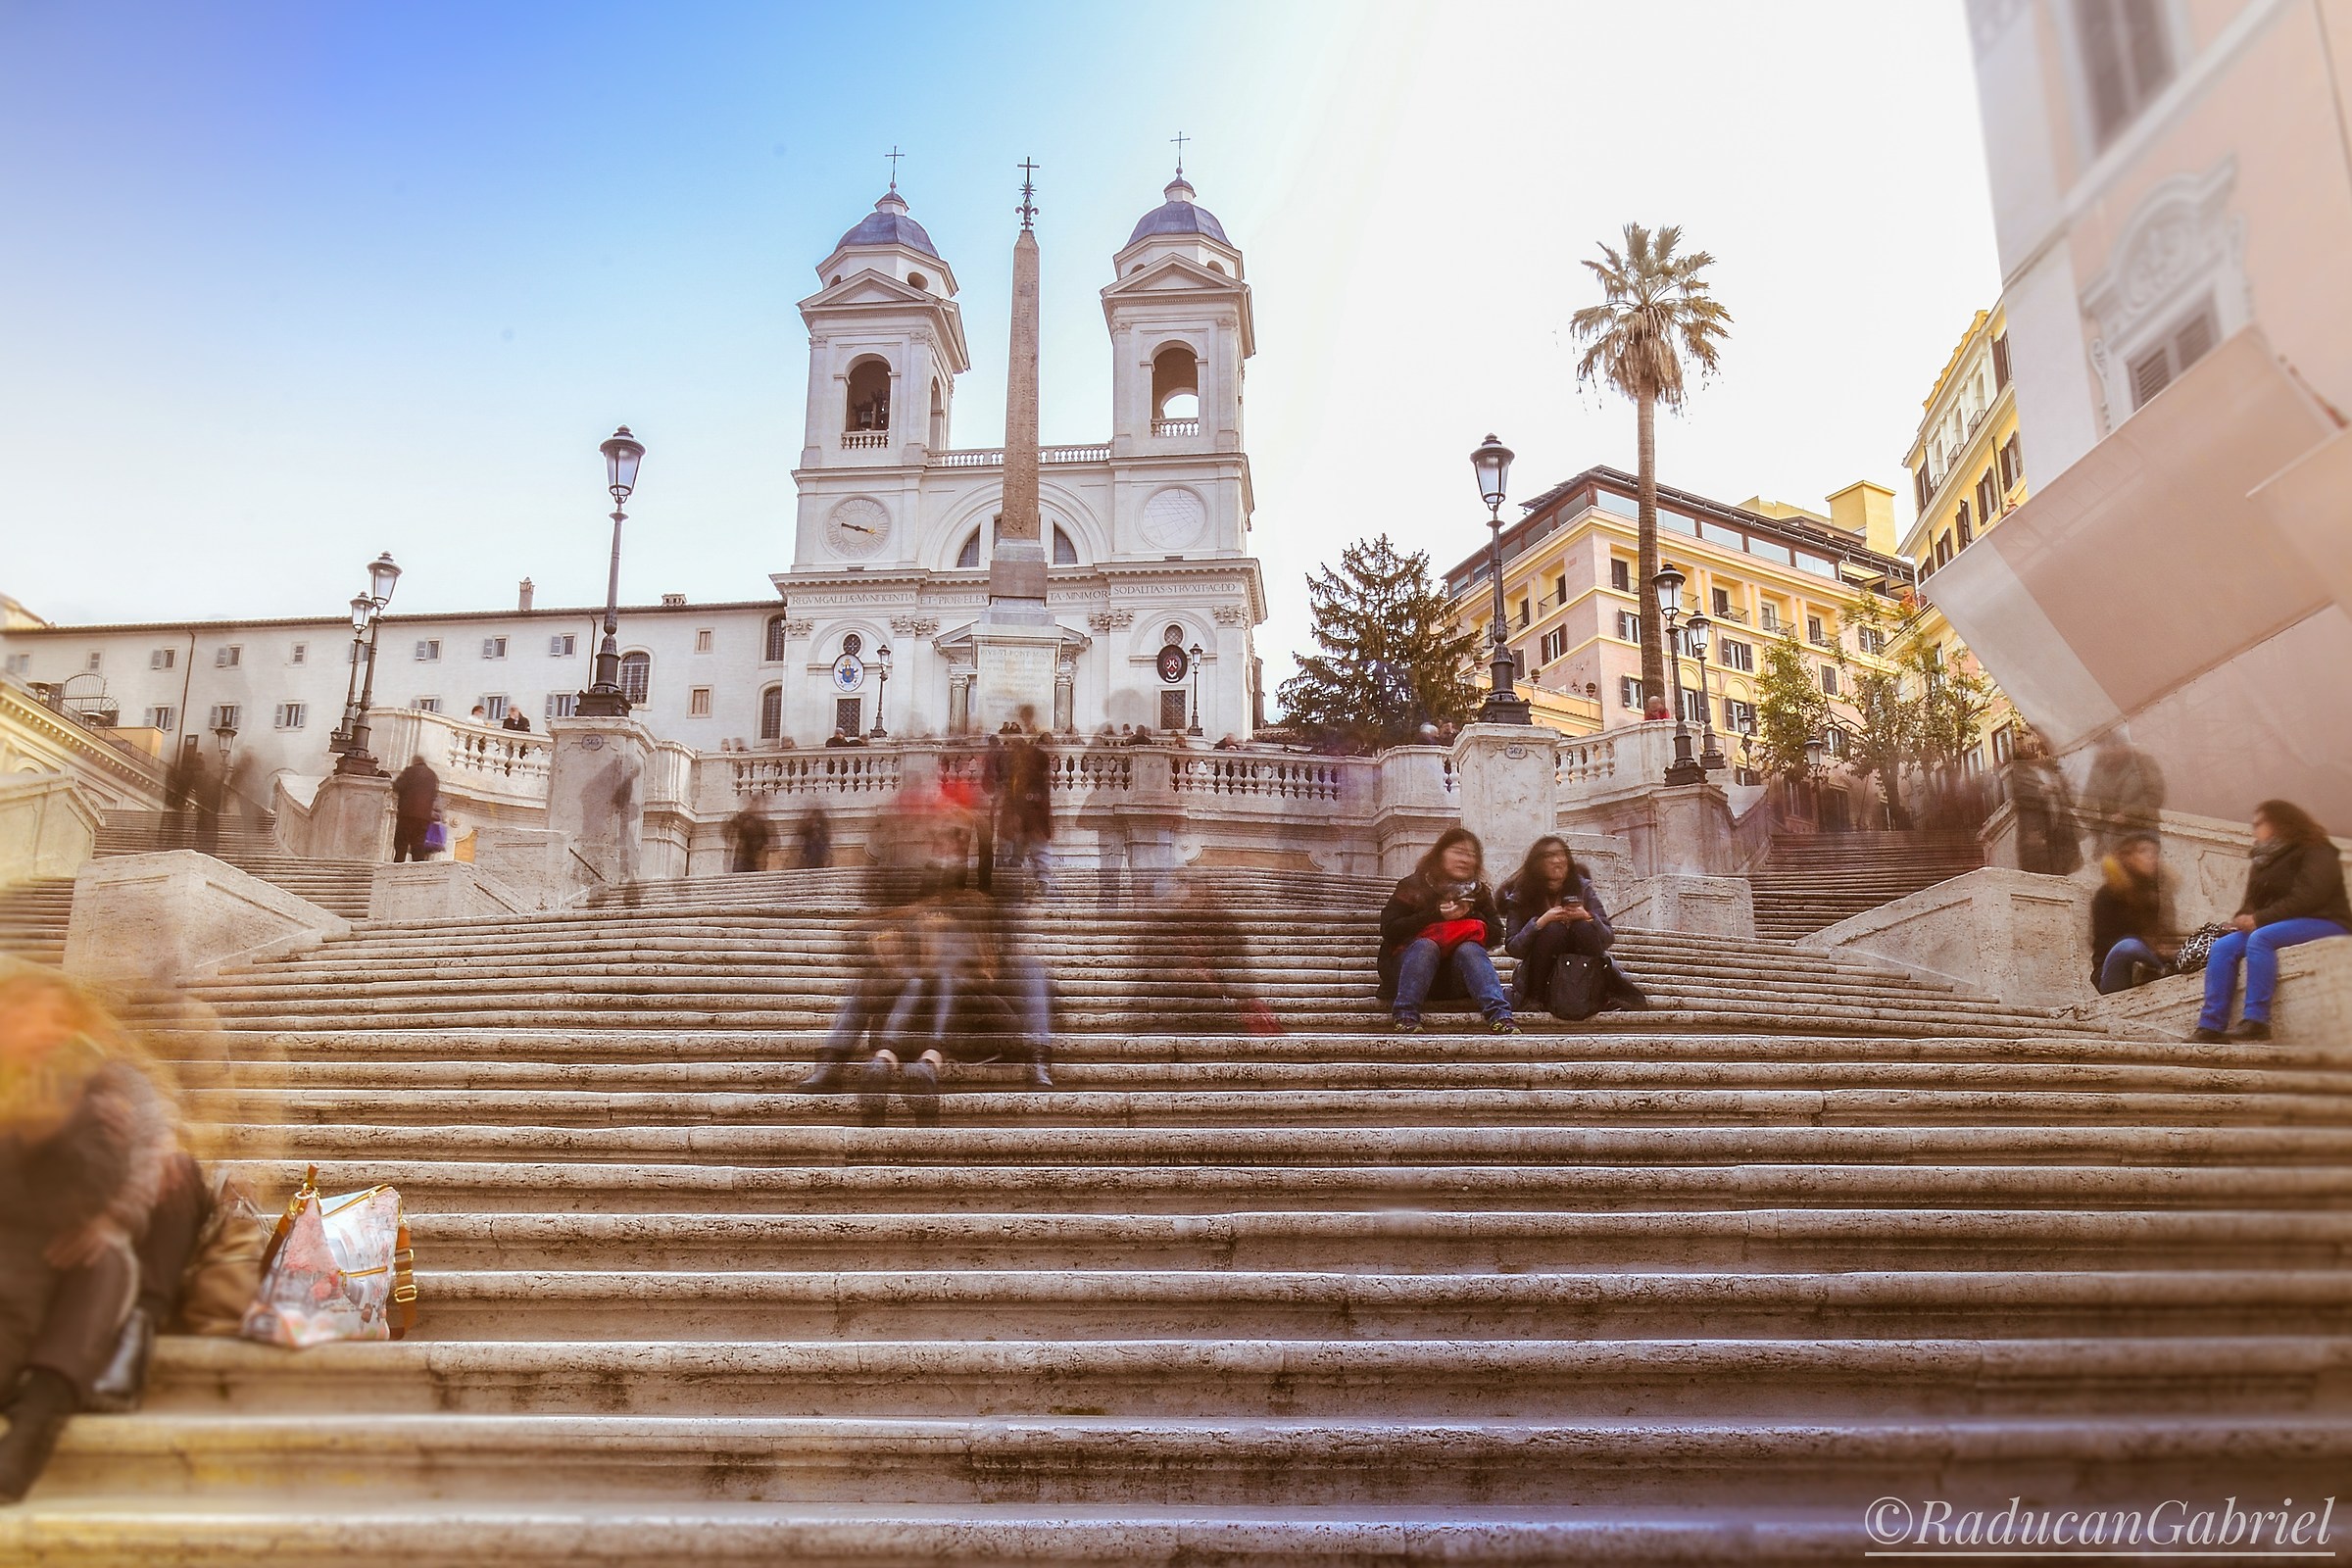 The Piazza di Spagna staircase...